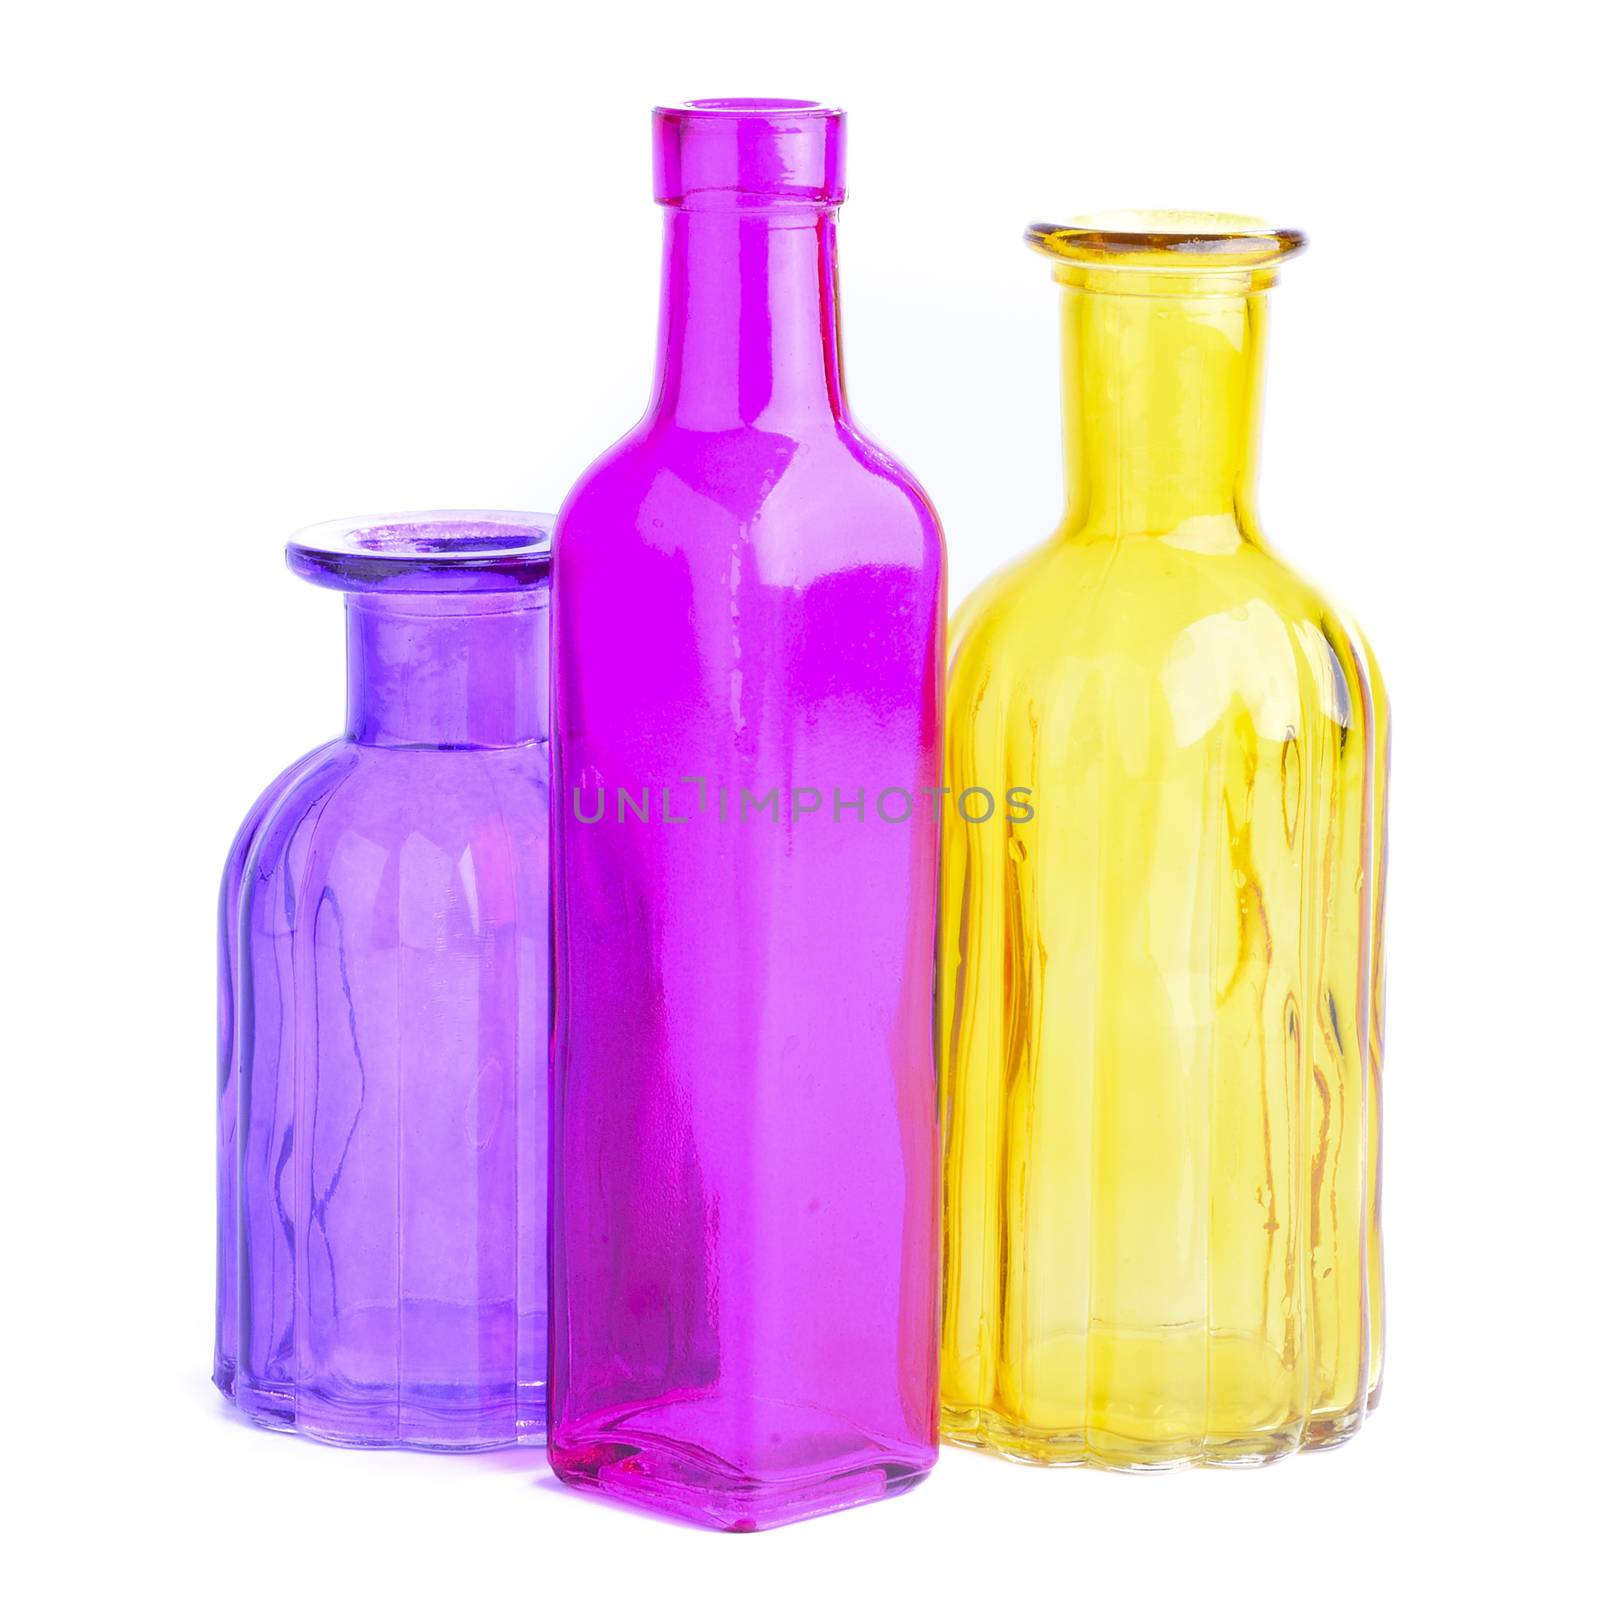 colorful bottles by panuruangjan